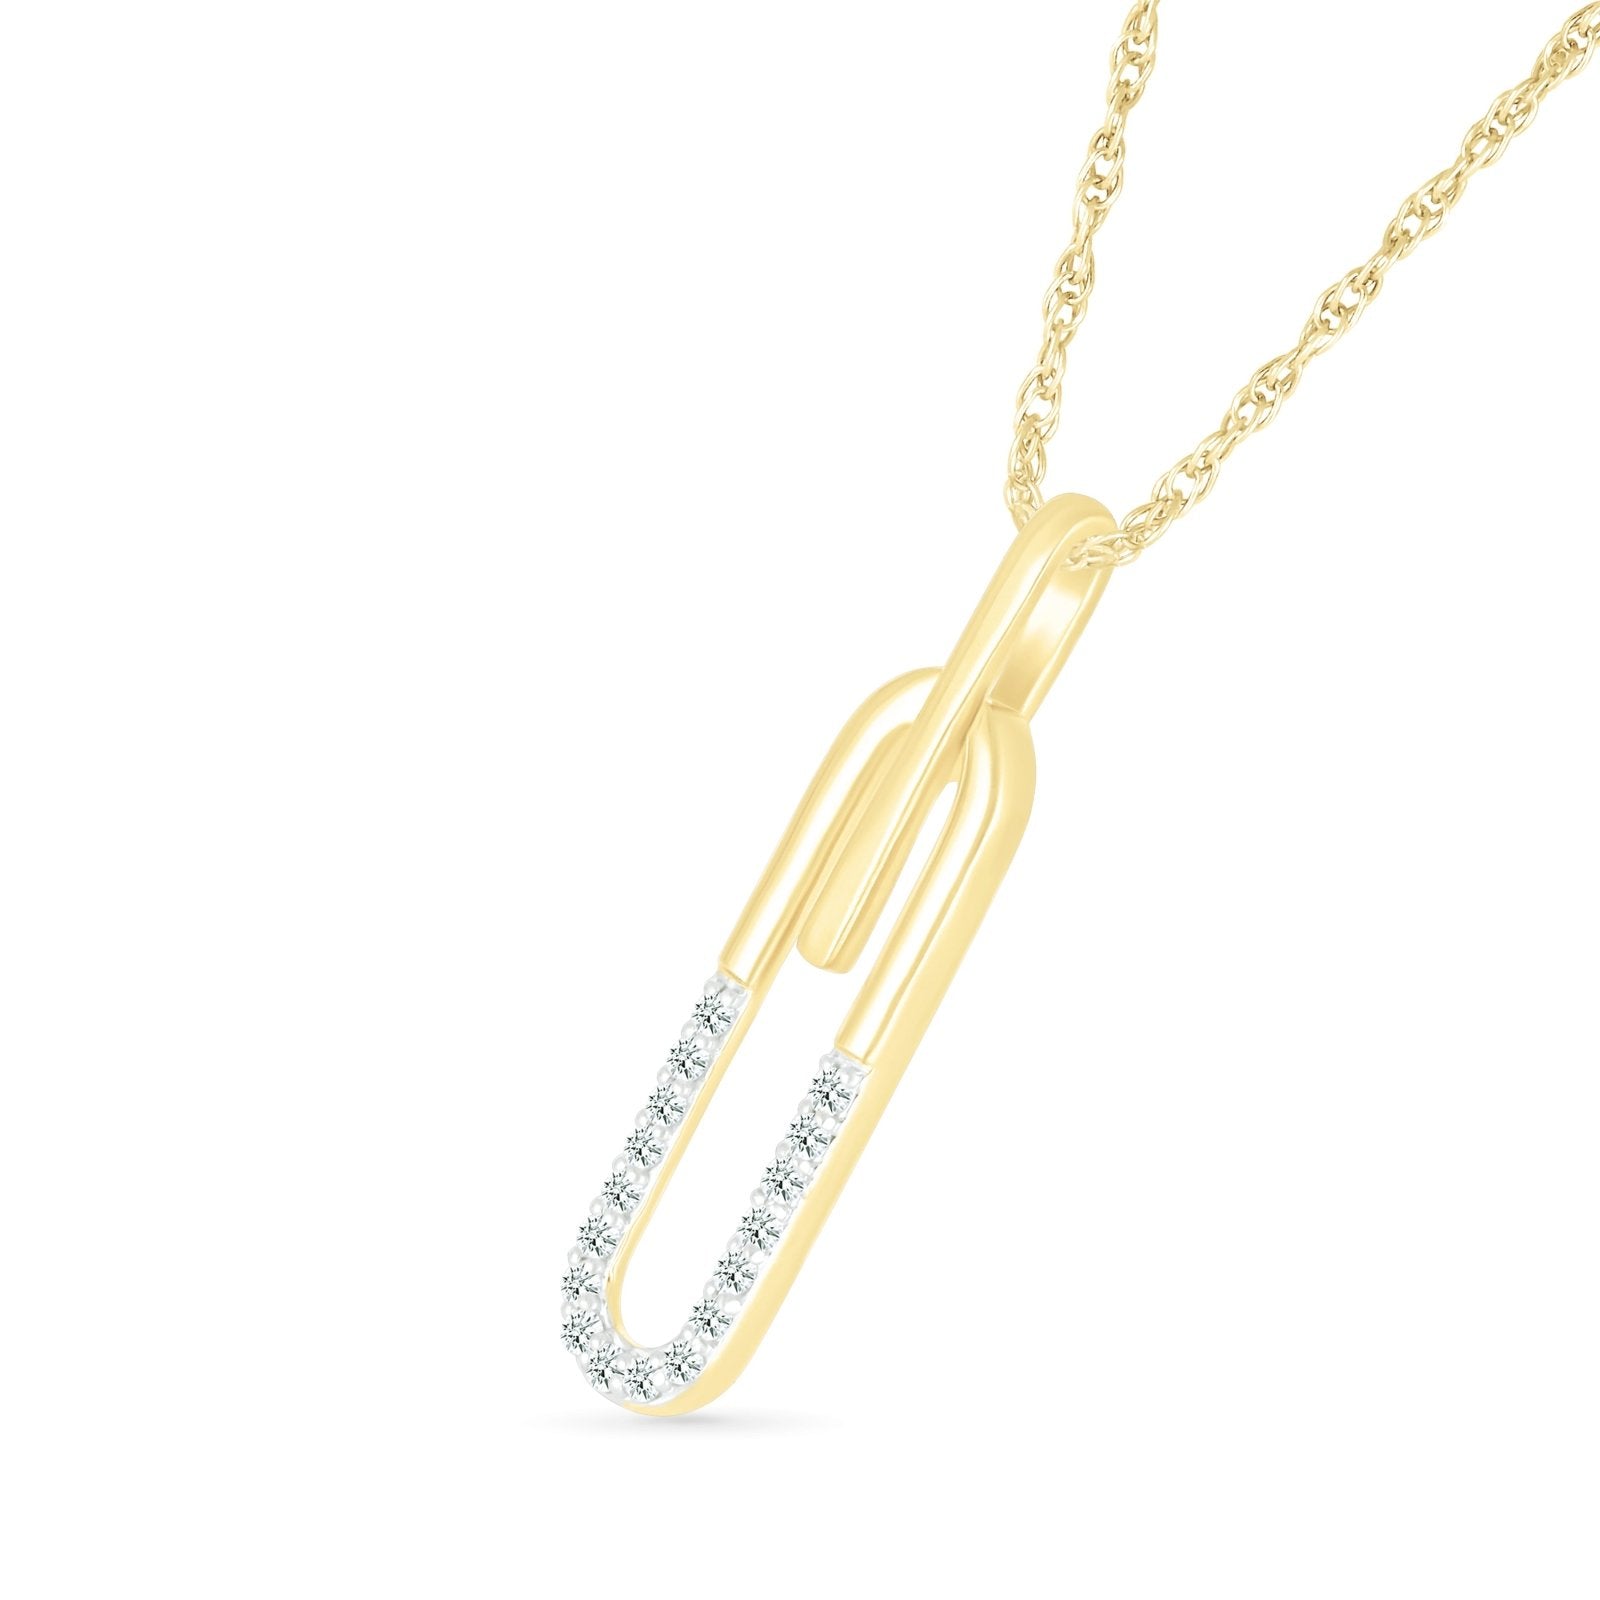 Half Gold Half Diamond Paperclip Pendant Necklace Necklaces Estella Collection #product_description# 32731 Diamond Made to Order Make Collection #tag4# #tag5# #tag6# #tag7# #tag8# #tag9# #tag10#